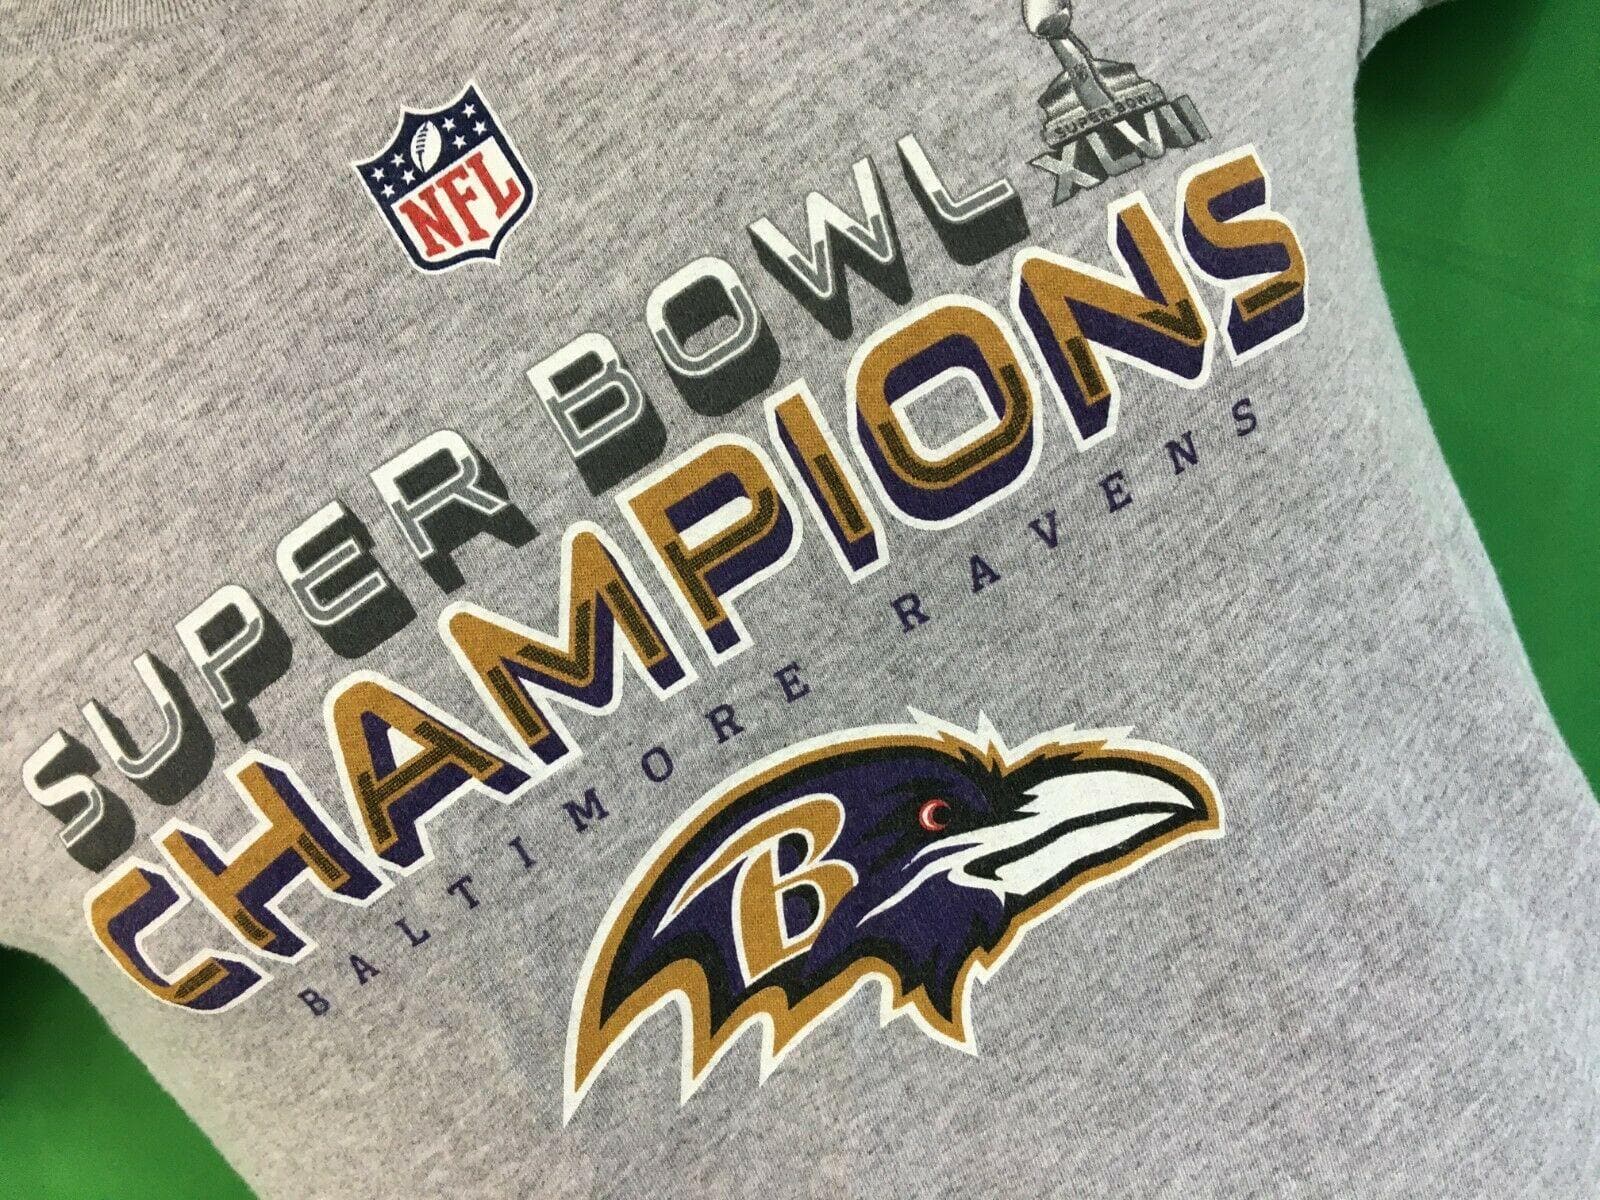 NFL Baltimore Ravens Super Bowl XLVII Champions T-Shirt Youth Medium 10-12 NWT